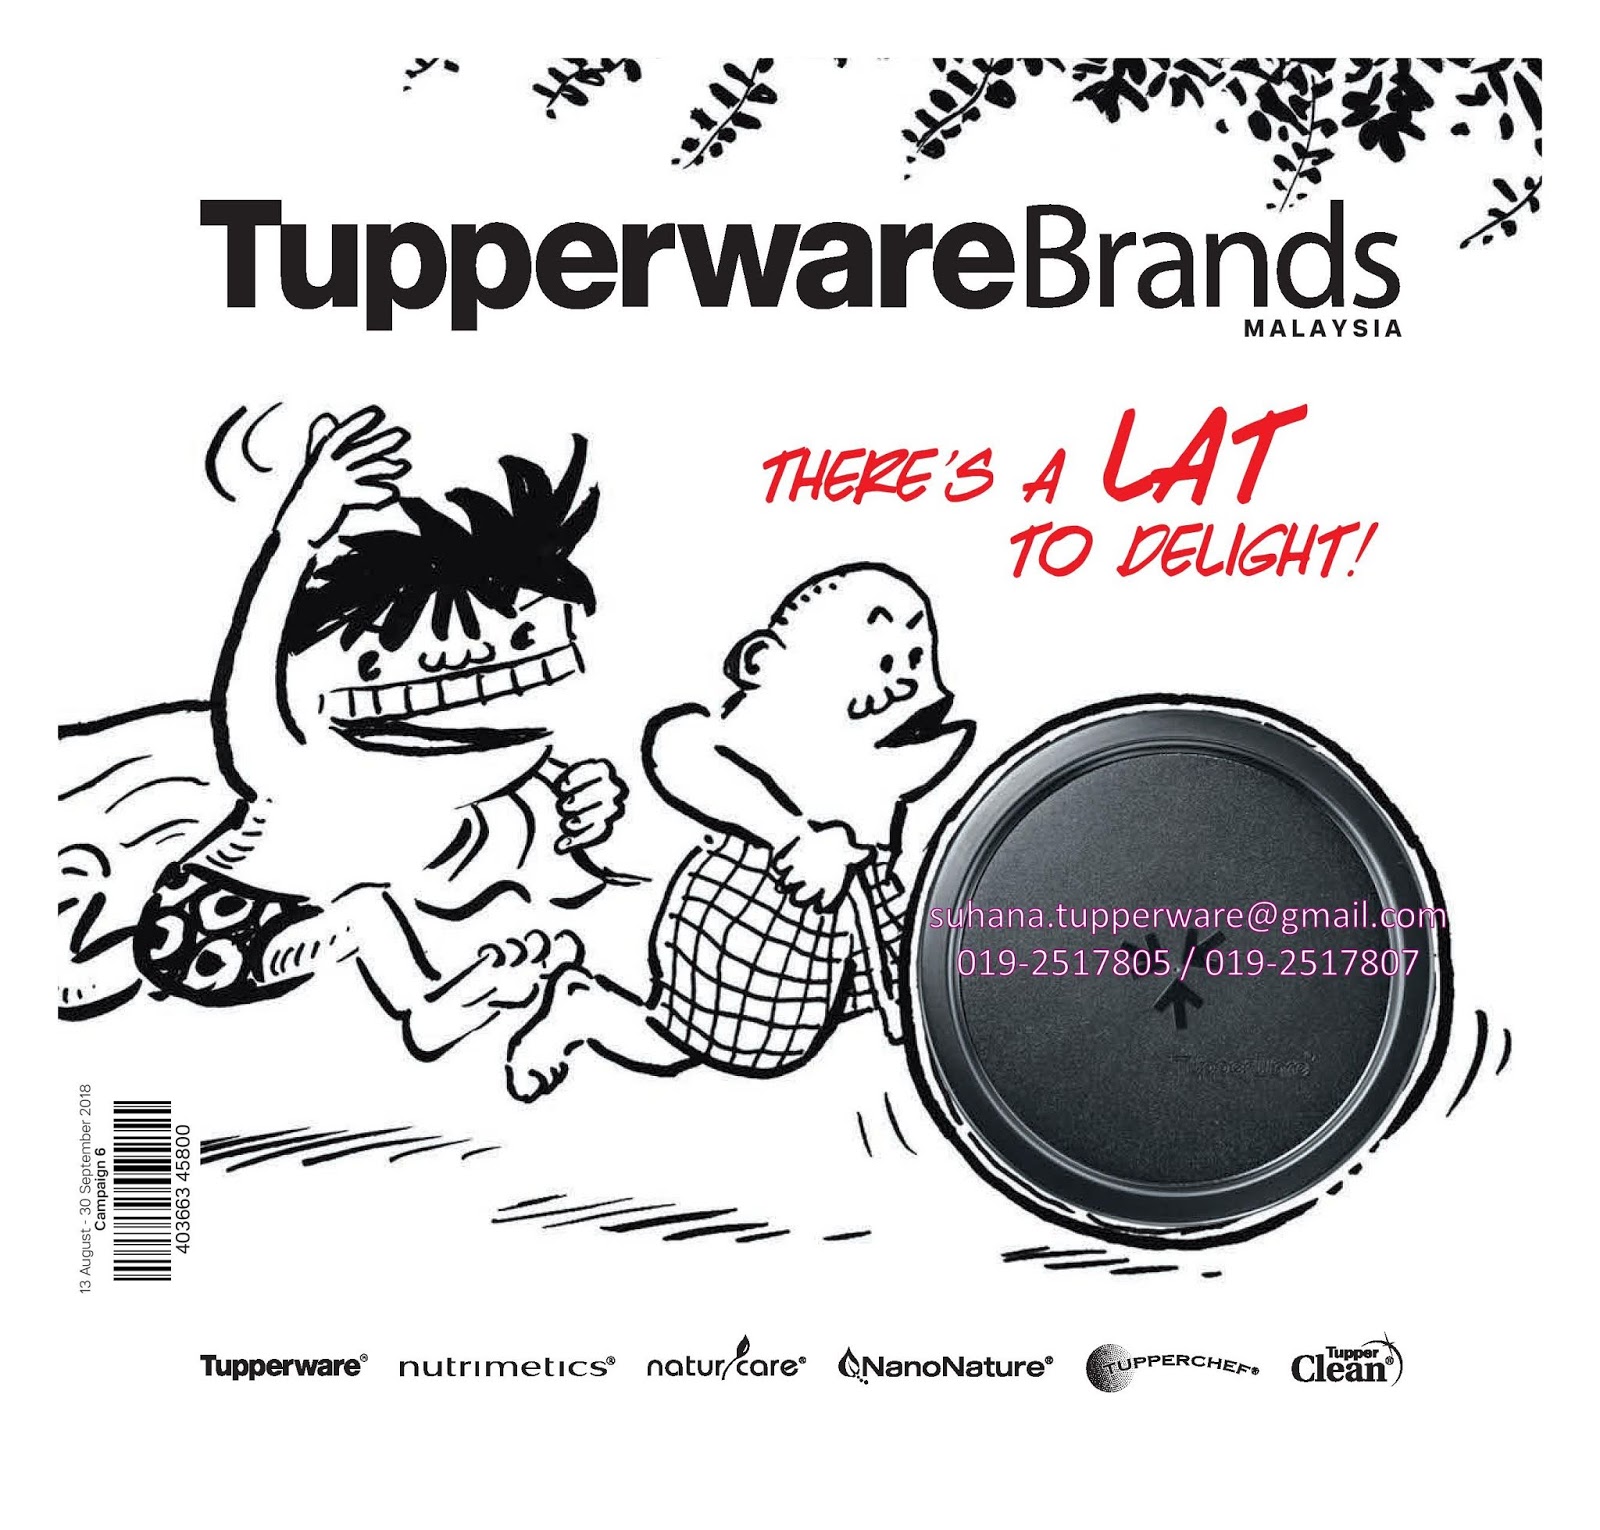 Tupperware Brands Campaign 7, 1 October – 13 November 2016, MALAYSIA